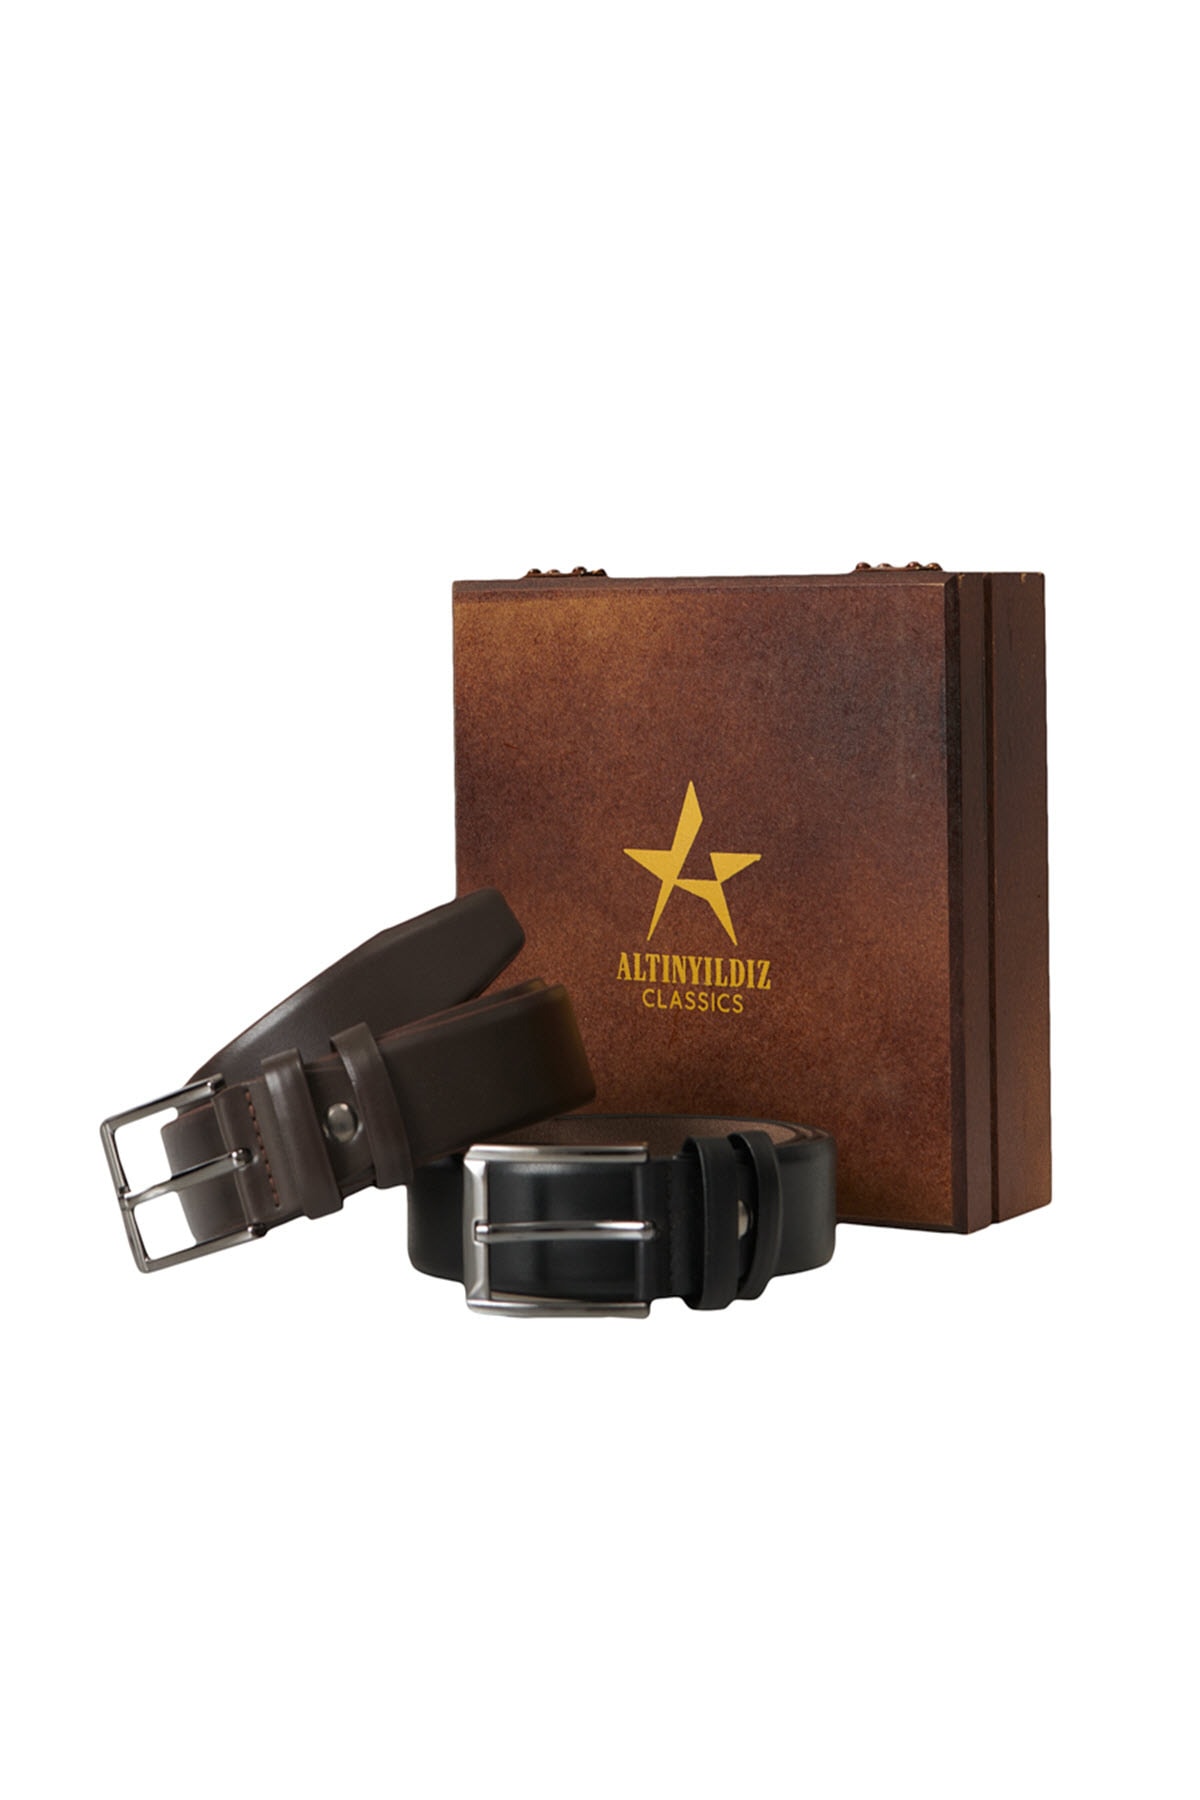 ALTINYILDIZ CLASSICS Men's Black-brown 2 Piece Casual Belt Set With Special Wooden Gift Box Groom's Pack